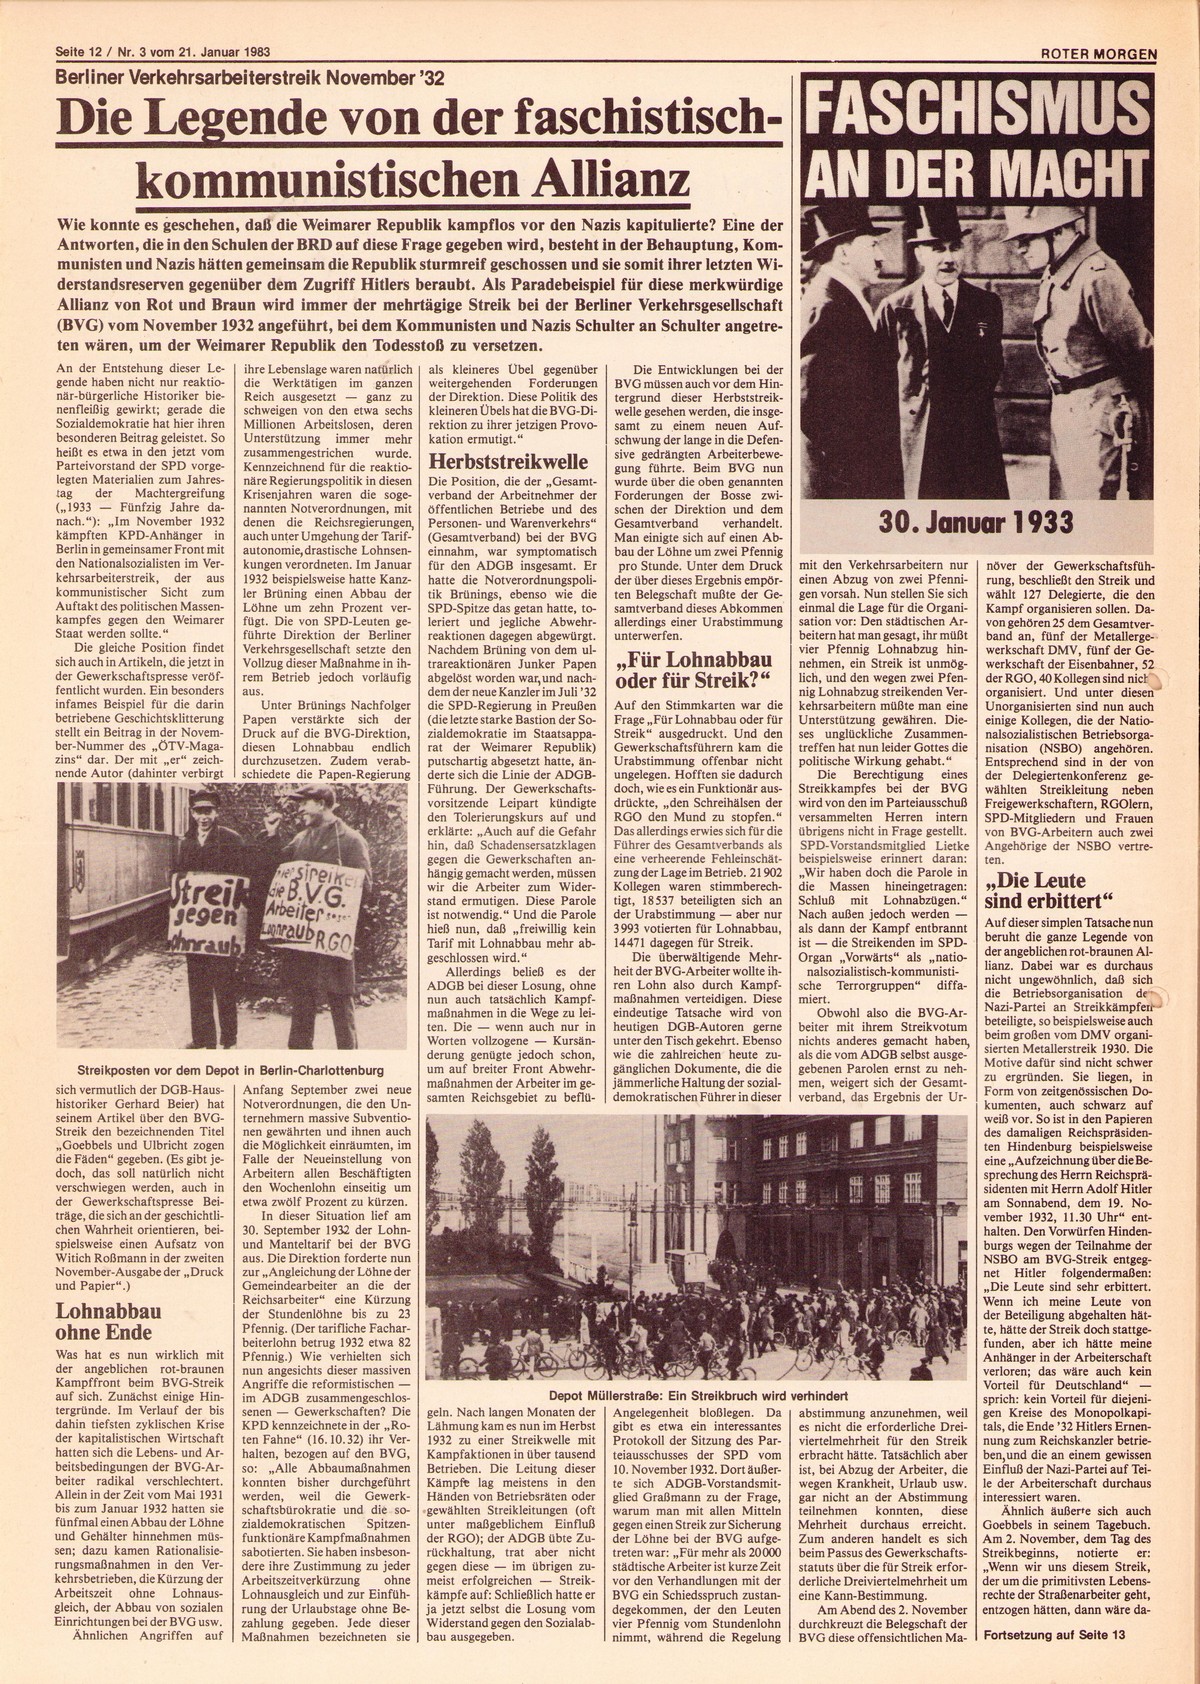 Roter Morgen, 17. Jg., 22. Januar 1983, Nr. 3, Seite 12